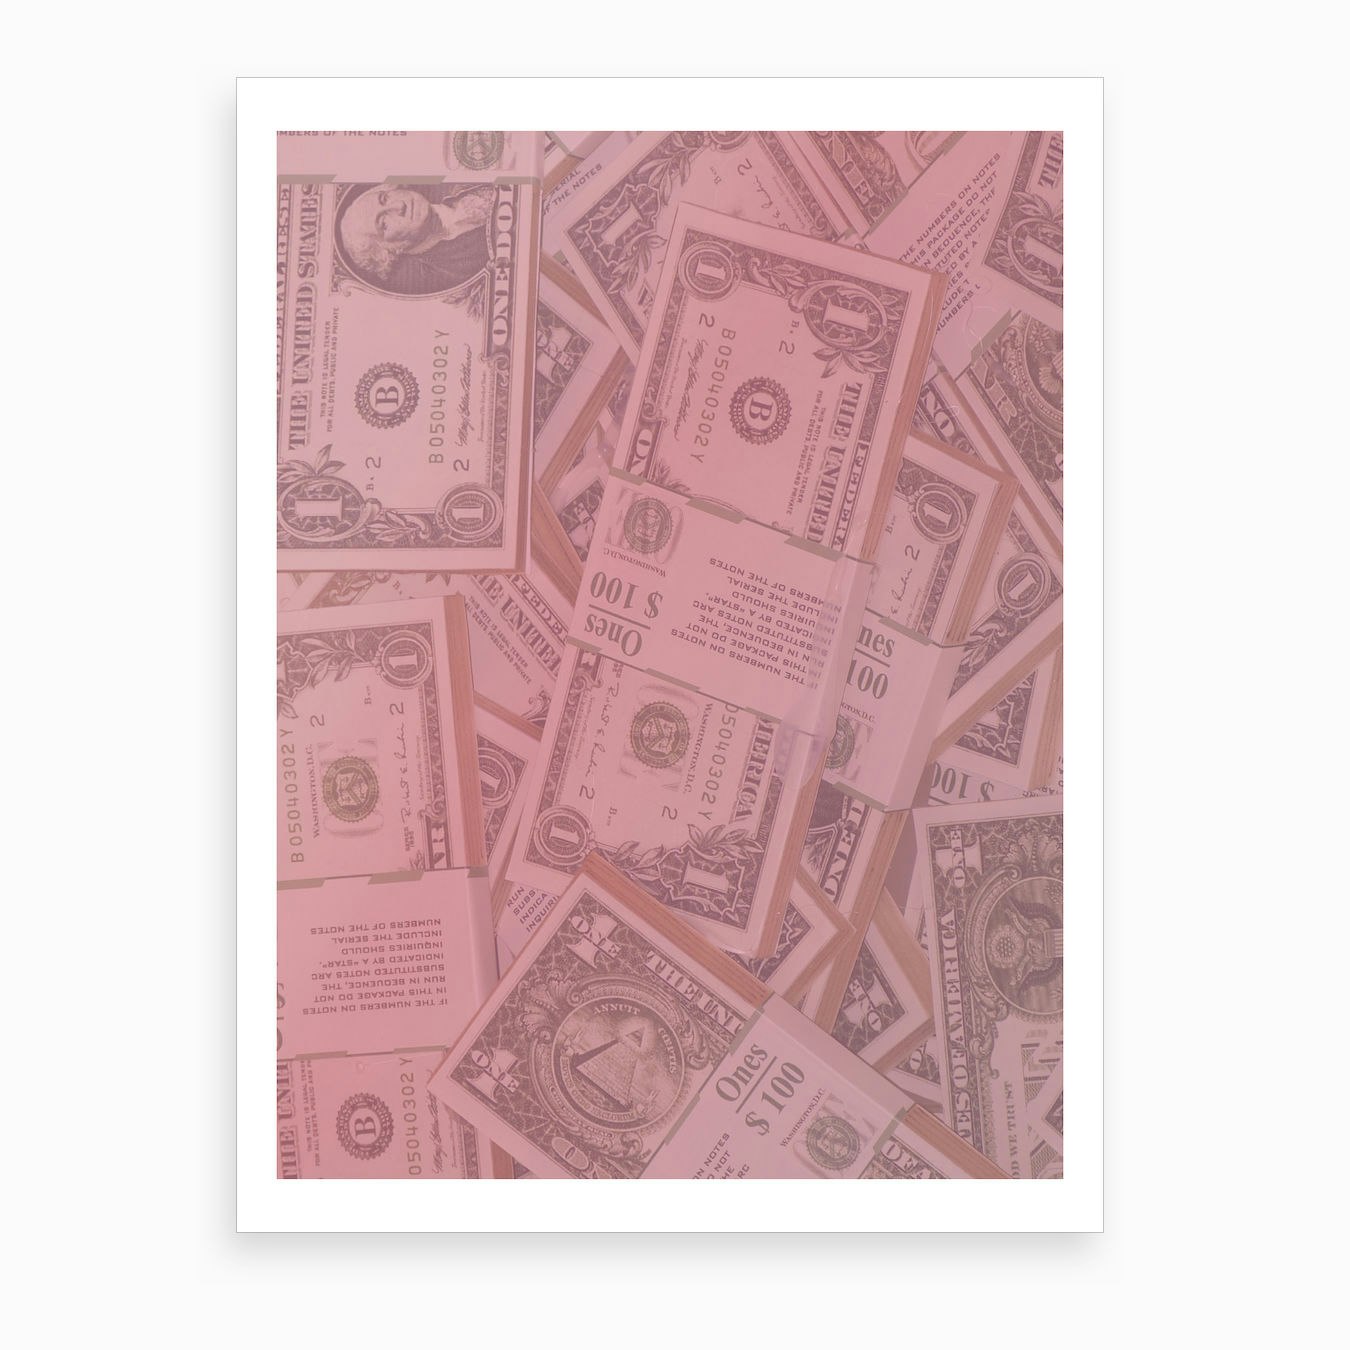 https://fydn.imgix.net/m%2Fpod-artwork%2Fpool%2F3c16eebcff53586d40addcbd6fe62288-pink-dollar-bills-art-print-P1.jpg?auto=format%2Ccompress&q=75